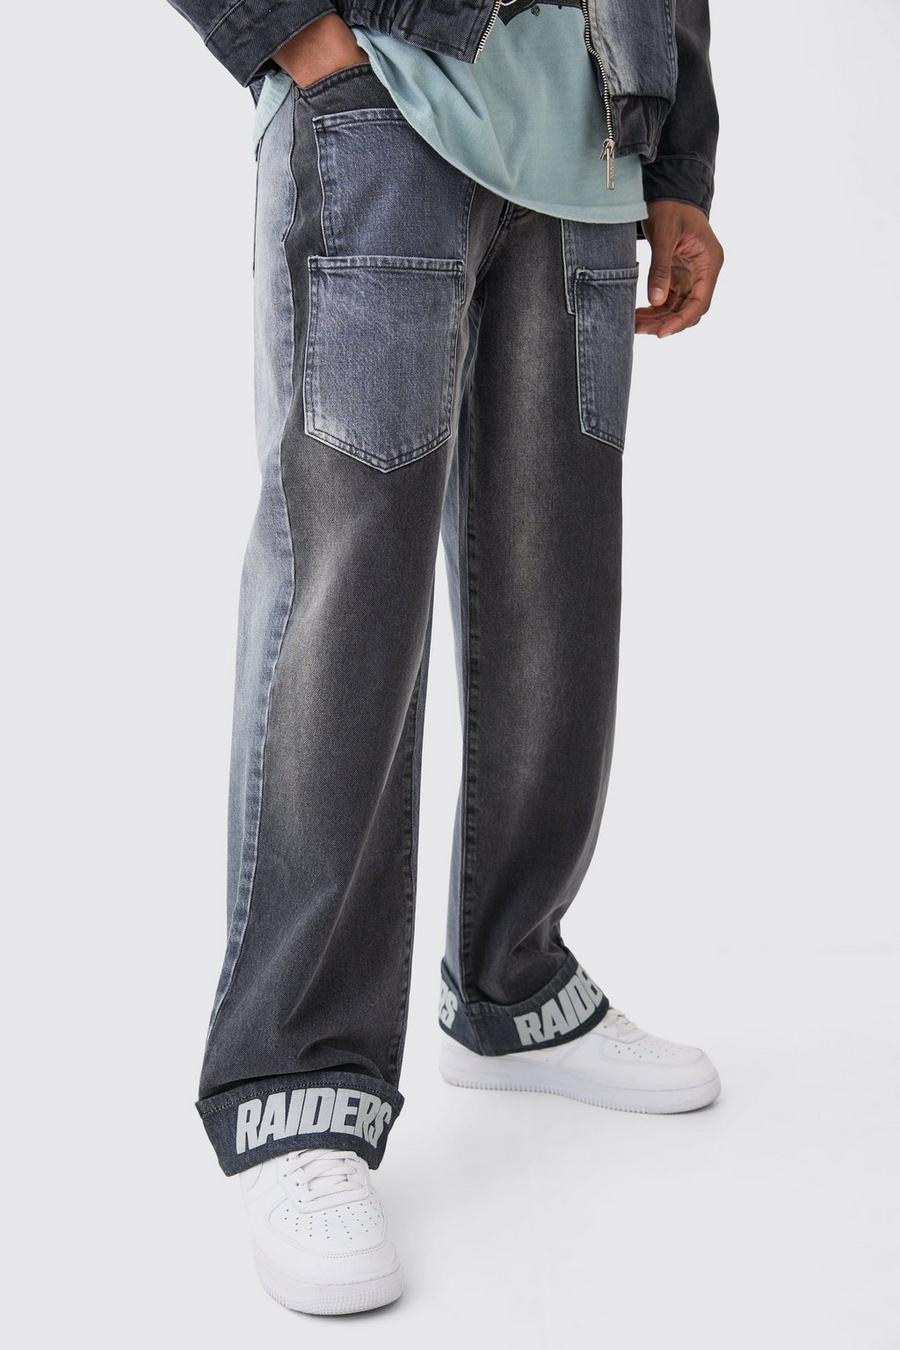 Charcoal Nfl Raiders Baggy Rigid Multi Pocket Spliced Jeans image number 1